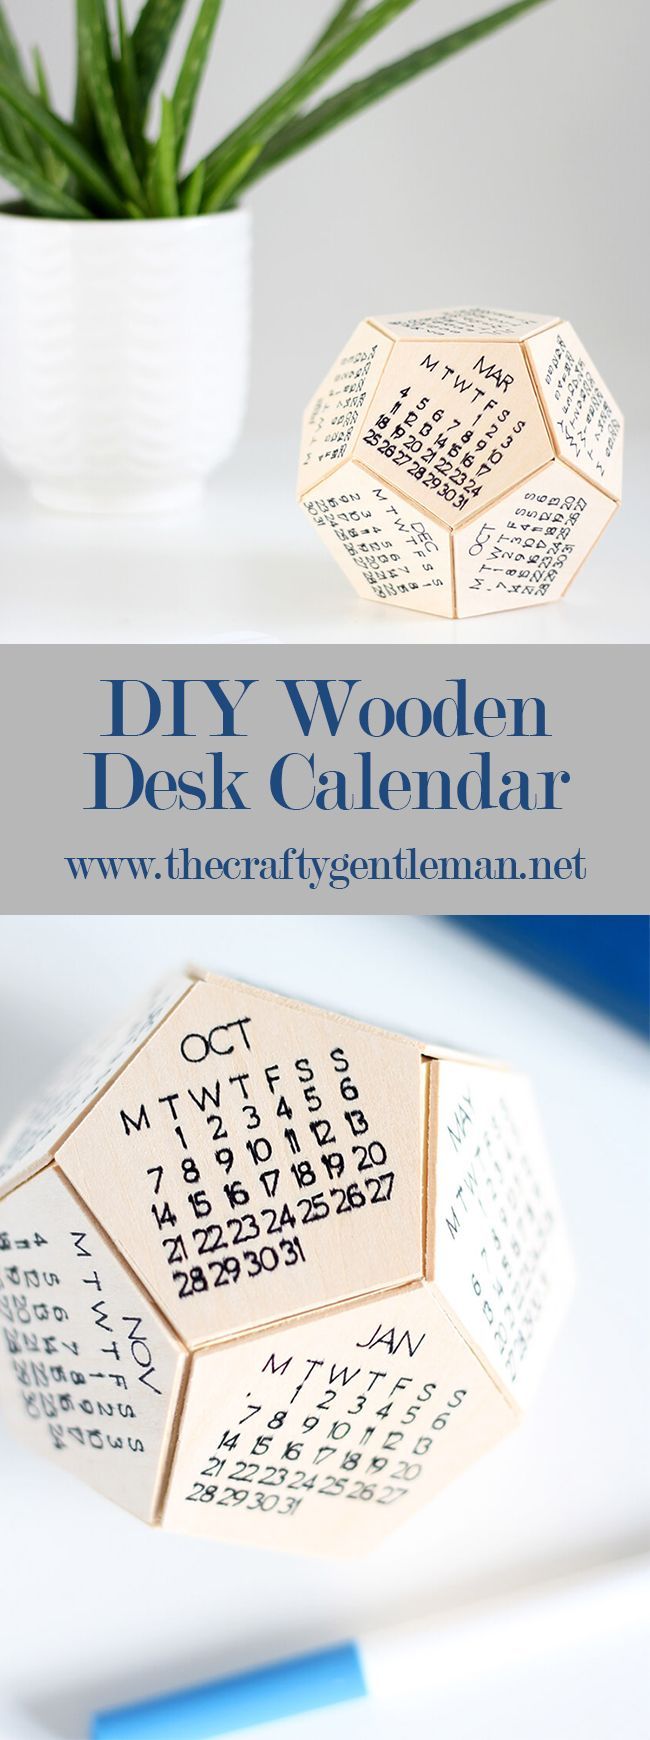 DIY Wooden Desk Calendar with the Cricut Maker | The Crafty Gentleman - DIY Wooden Desk Calendar with the Cricut Maker | The Crafty Gentleman -   18 diy Projects for him ideas